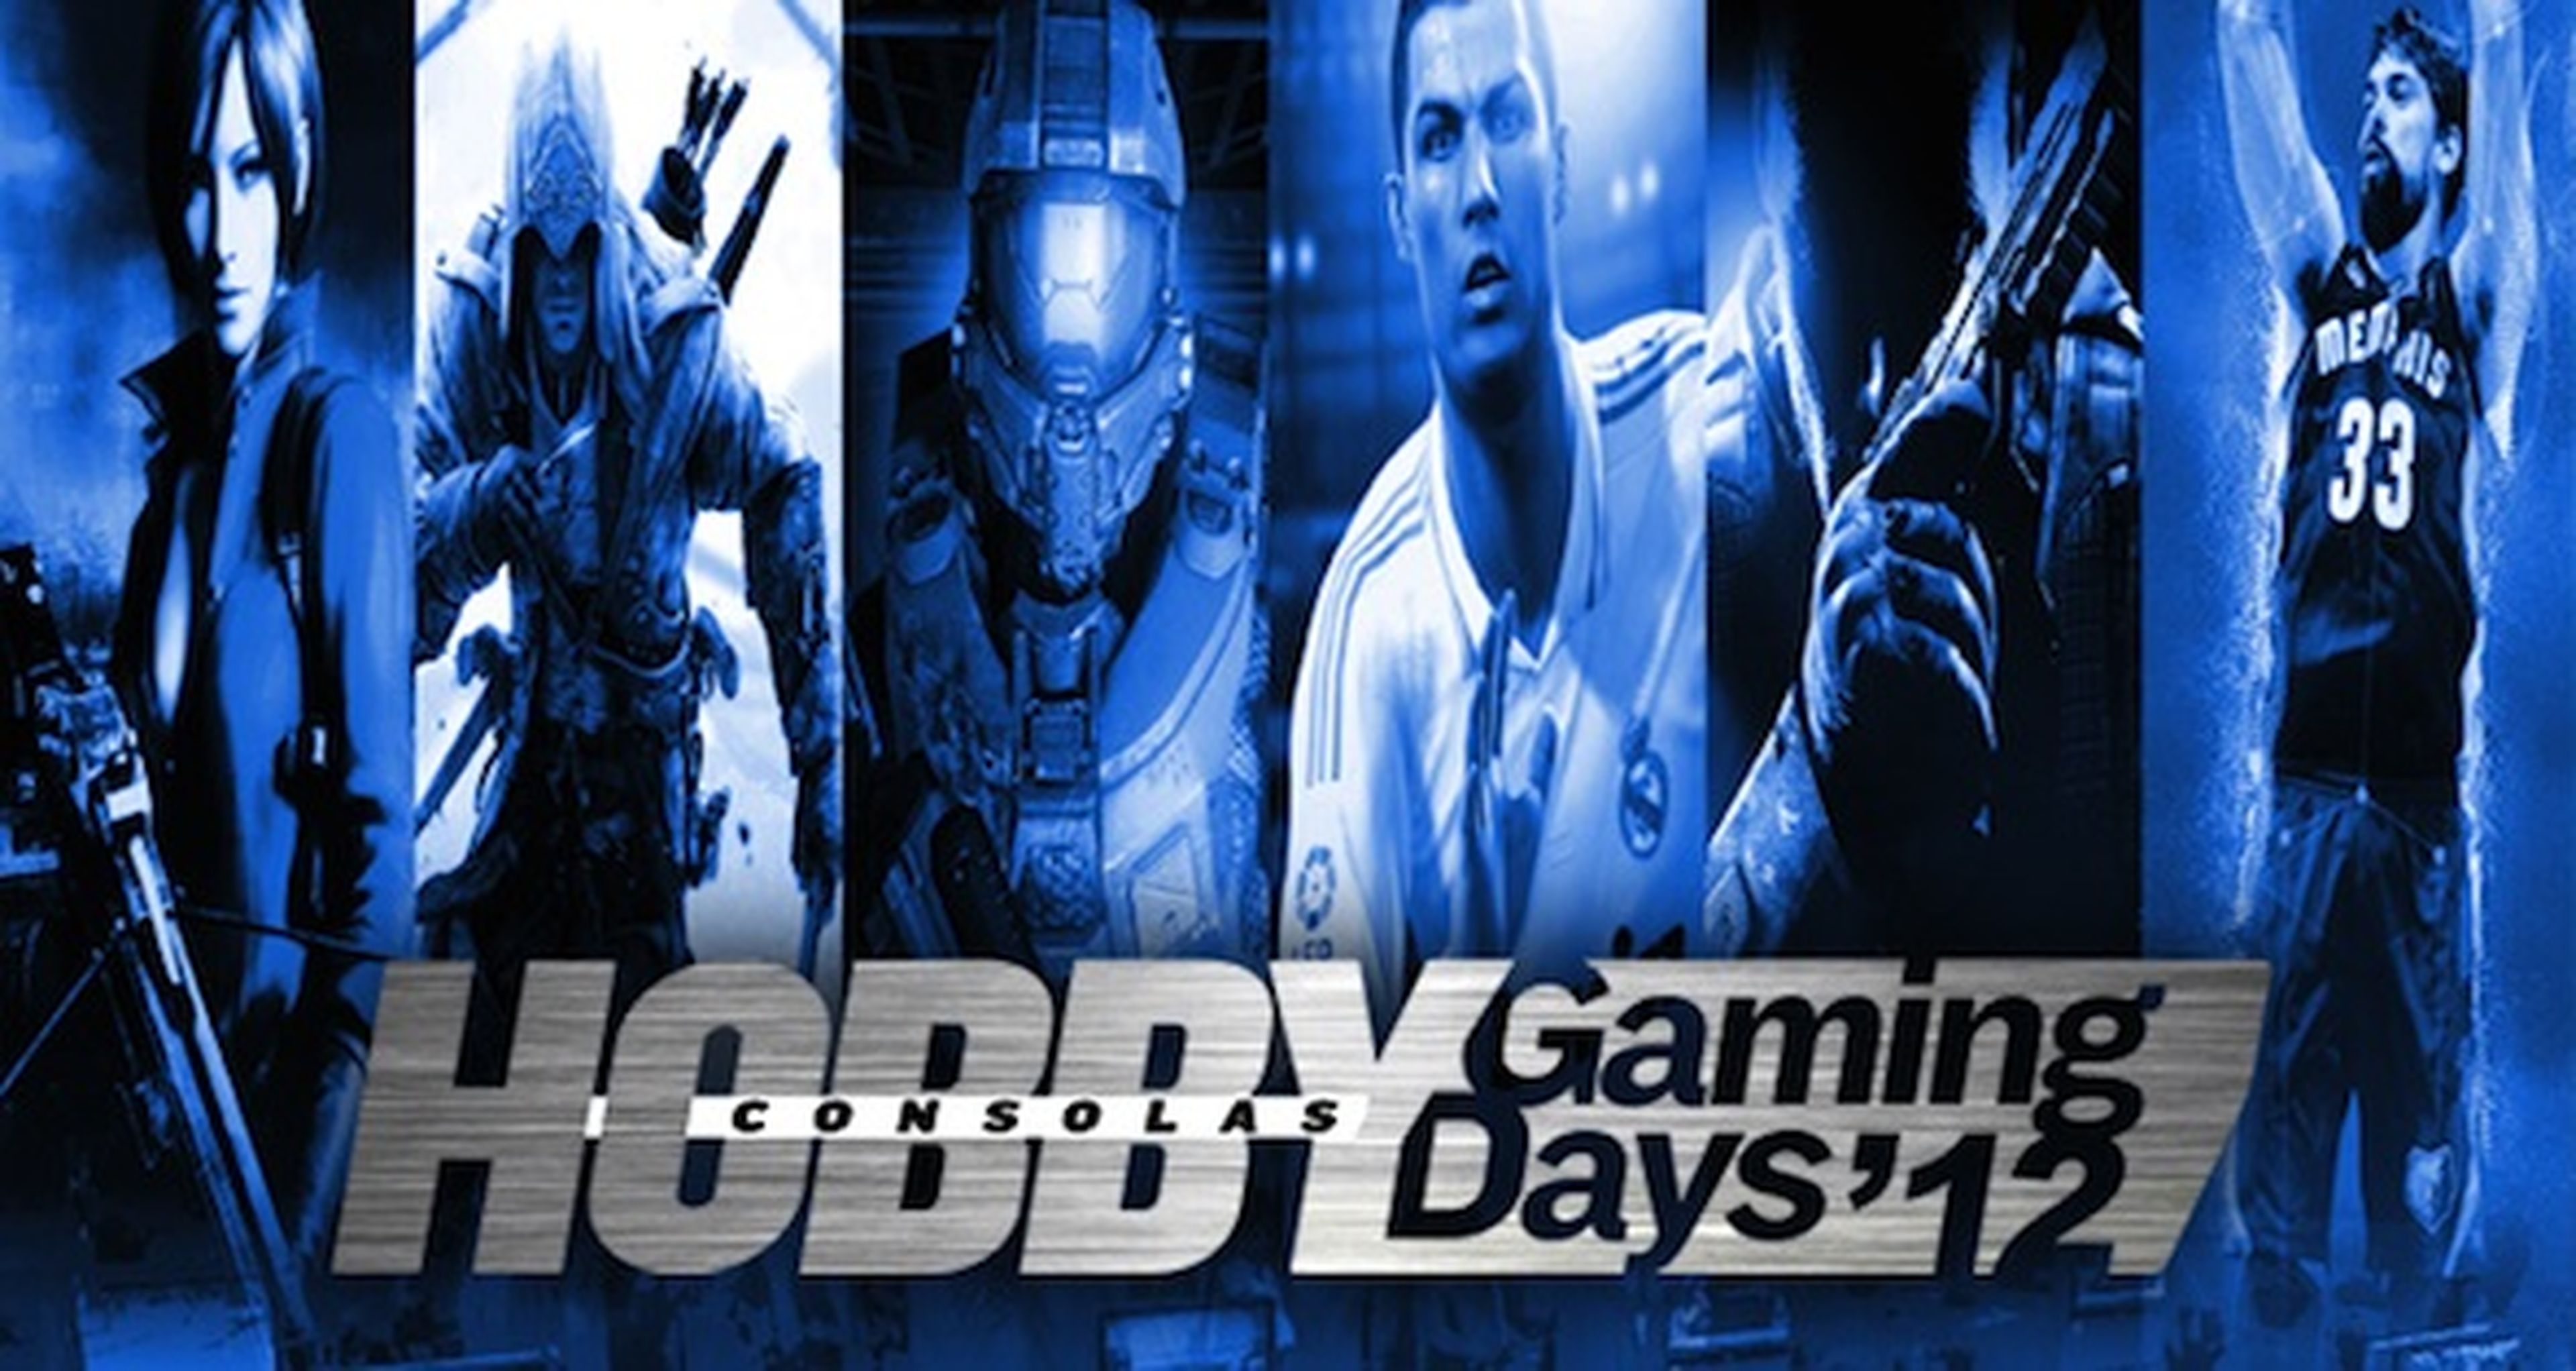 Hobby Consolas Gaming Days, en 2013